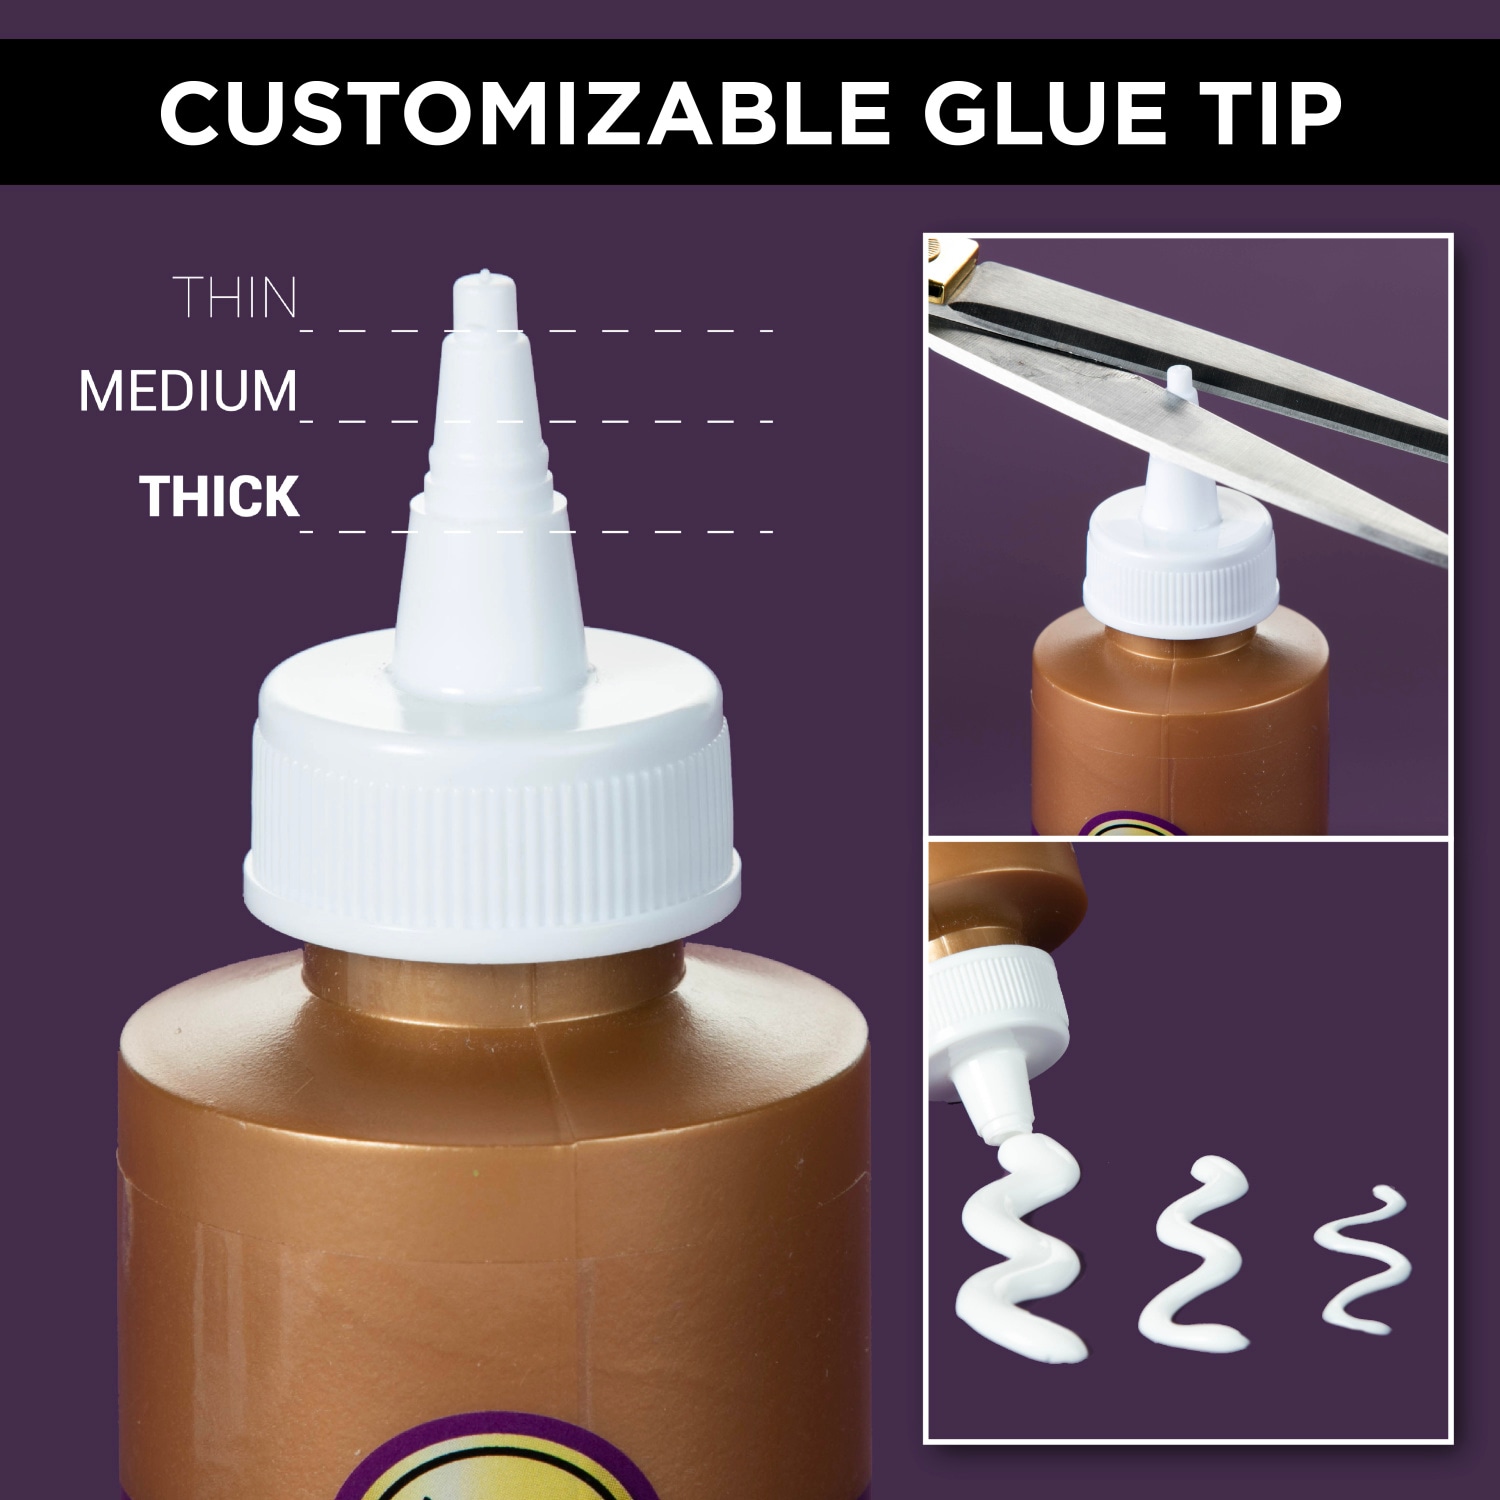 Aleene's Clear School Tacky Glue with Glue Stick - 4.8 fl. oz